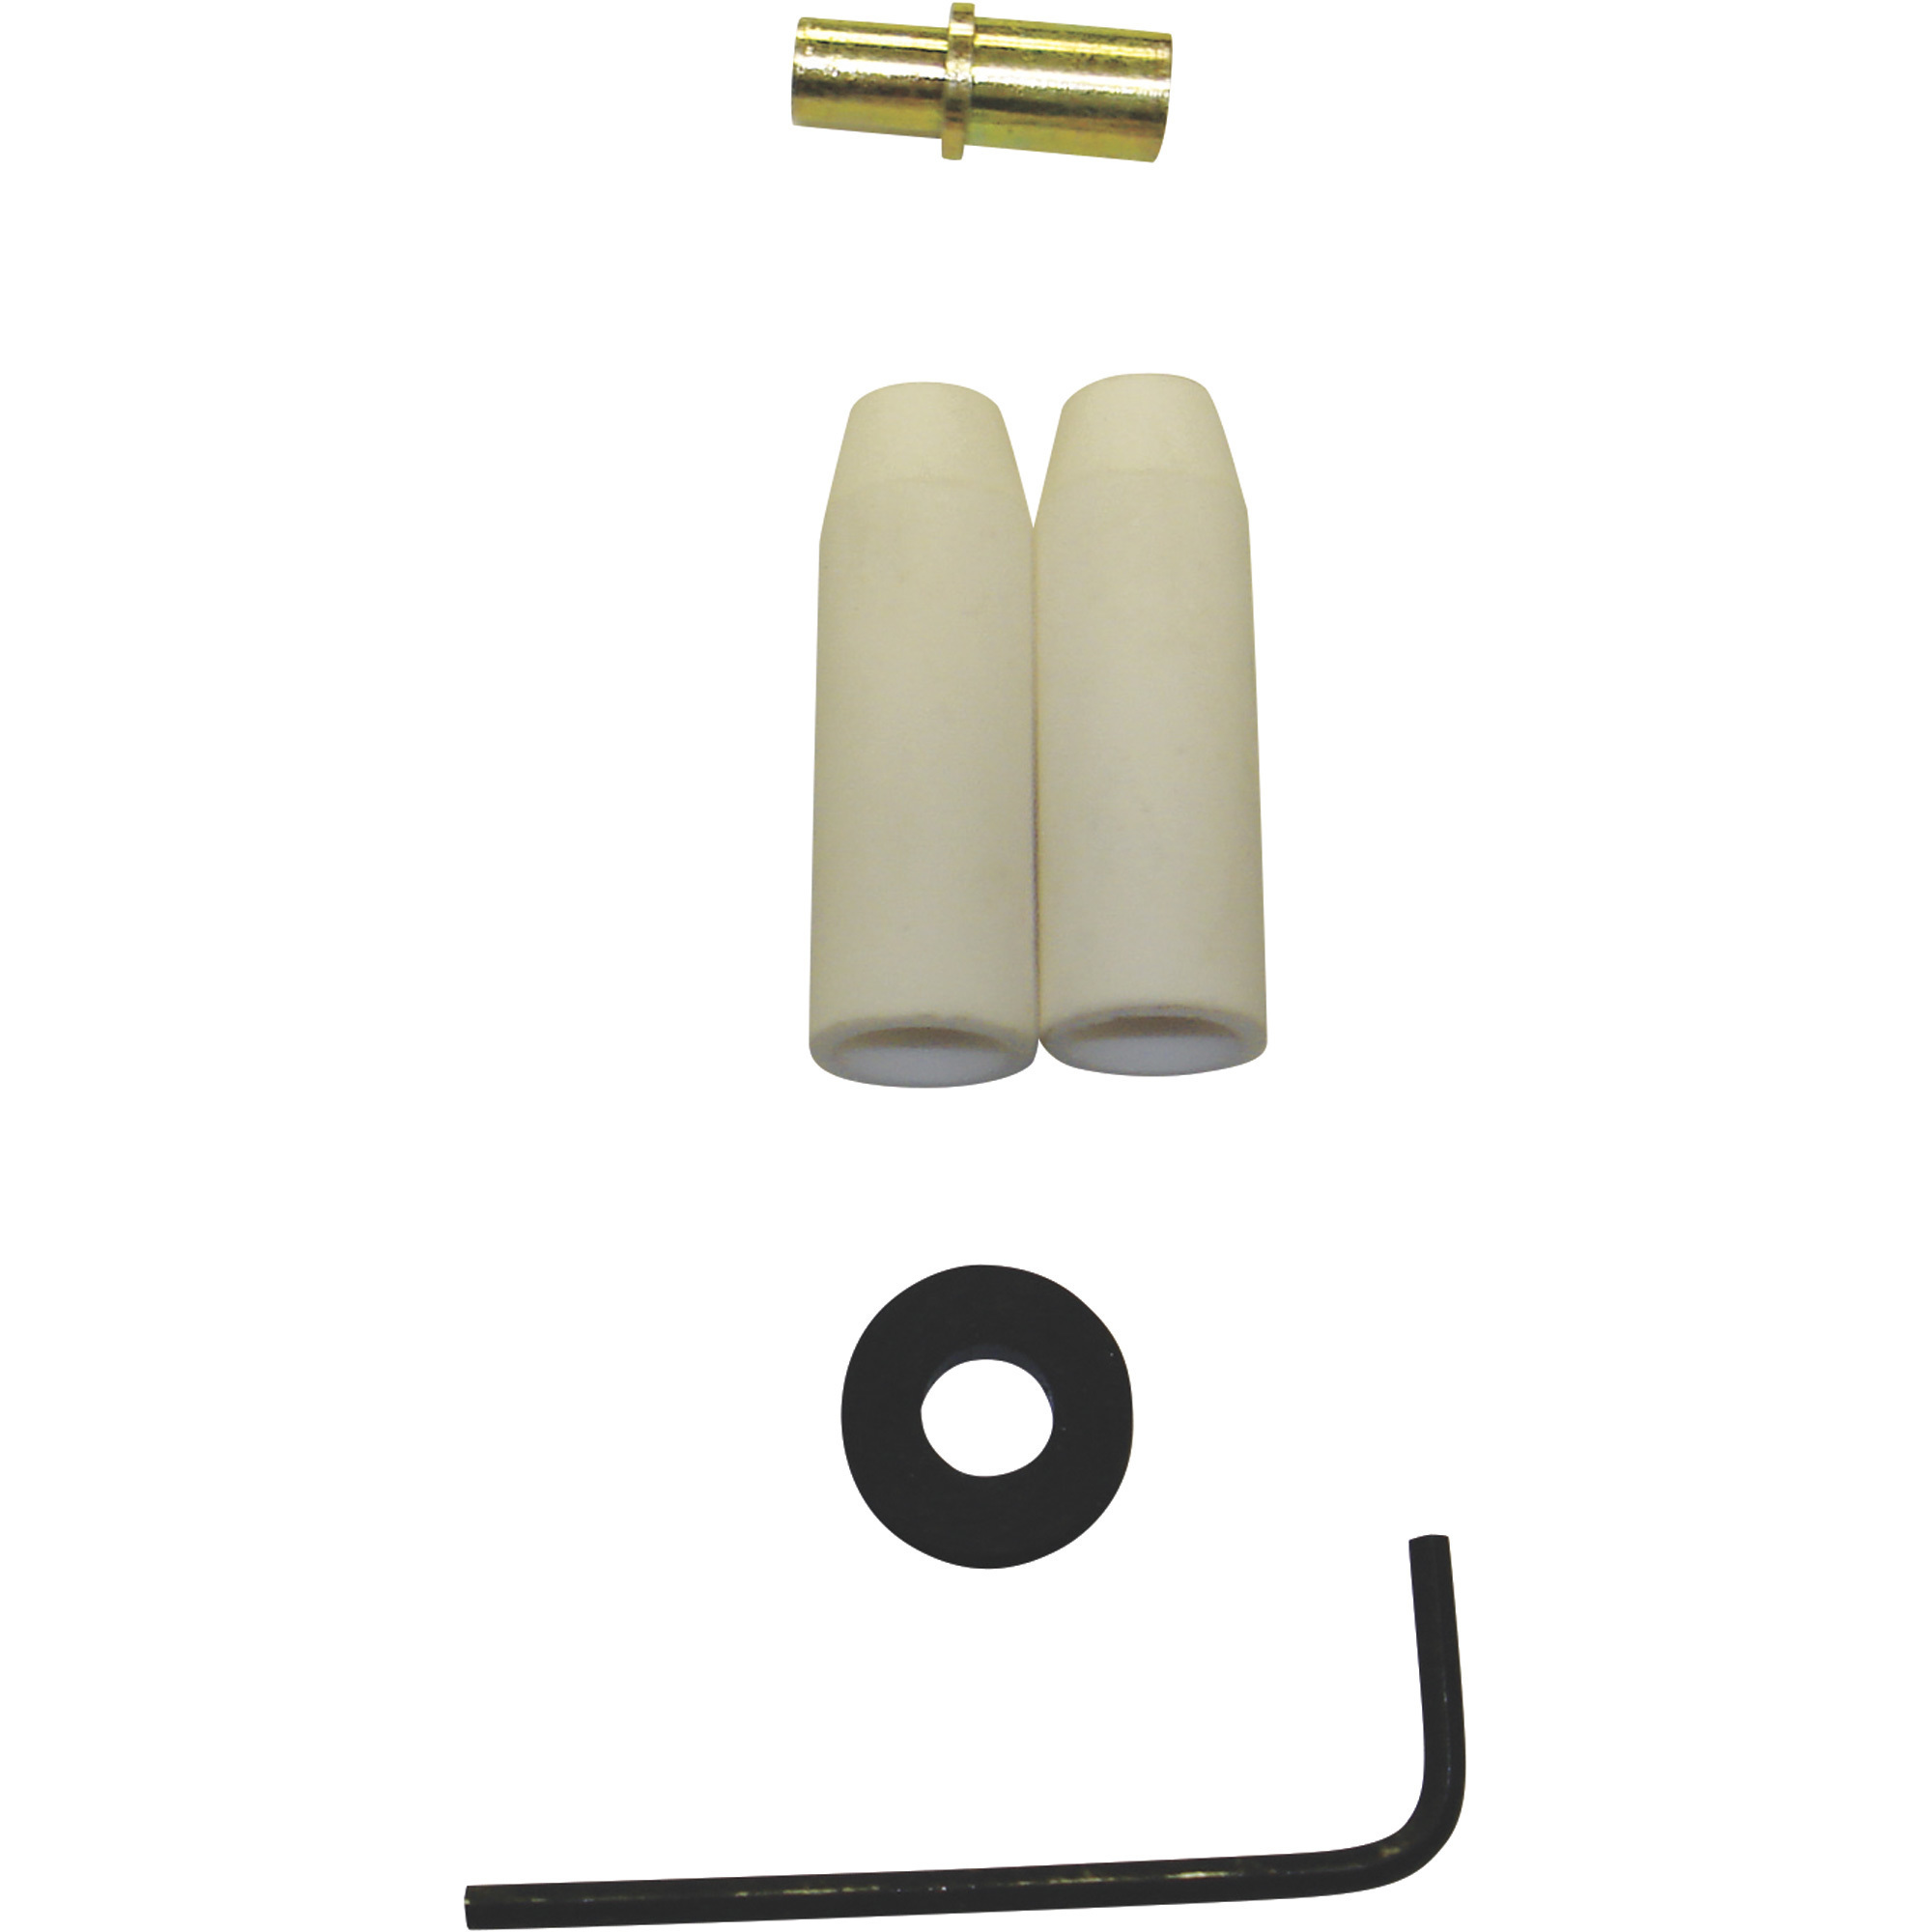 ALC Siphon Abrasive Blaster Ceramic Nozzle Kit â 13/64Inch I.D. x 1/2Inch O.D. x 1 1/2Inch L, Model 40059